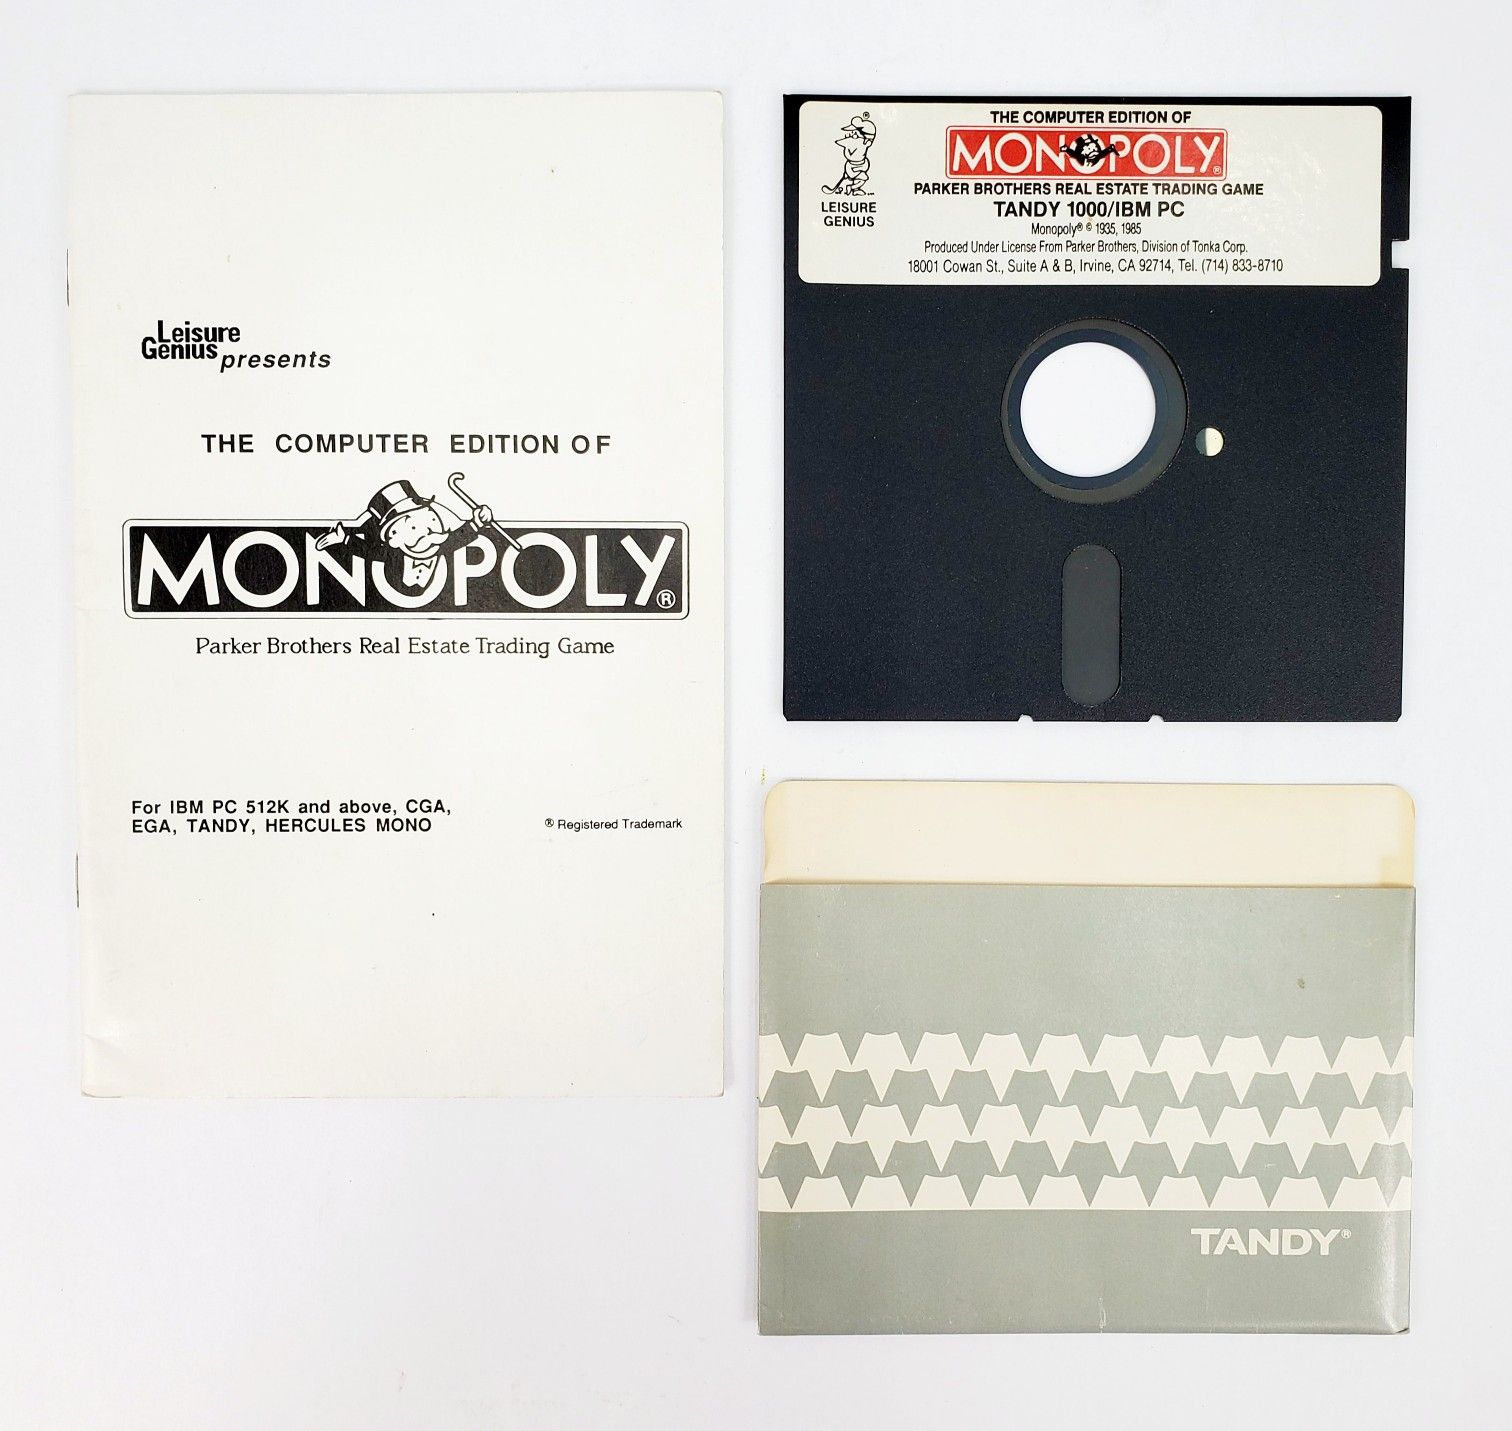 Leisure Genius - Monopoly - 5.25" Floppy Disk, Manual etc. (1985) - IBM PC Tandy